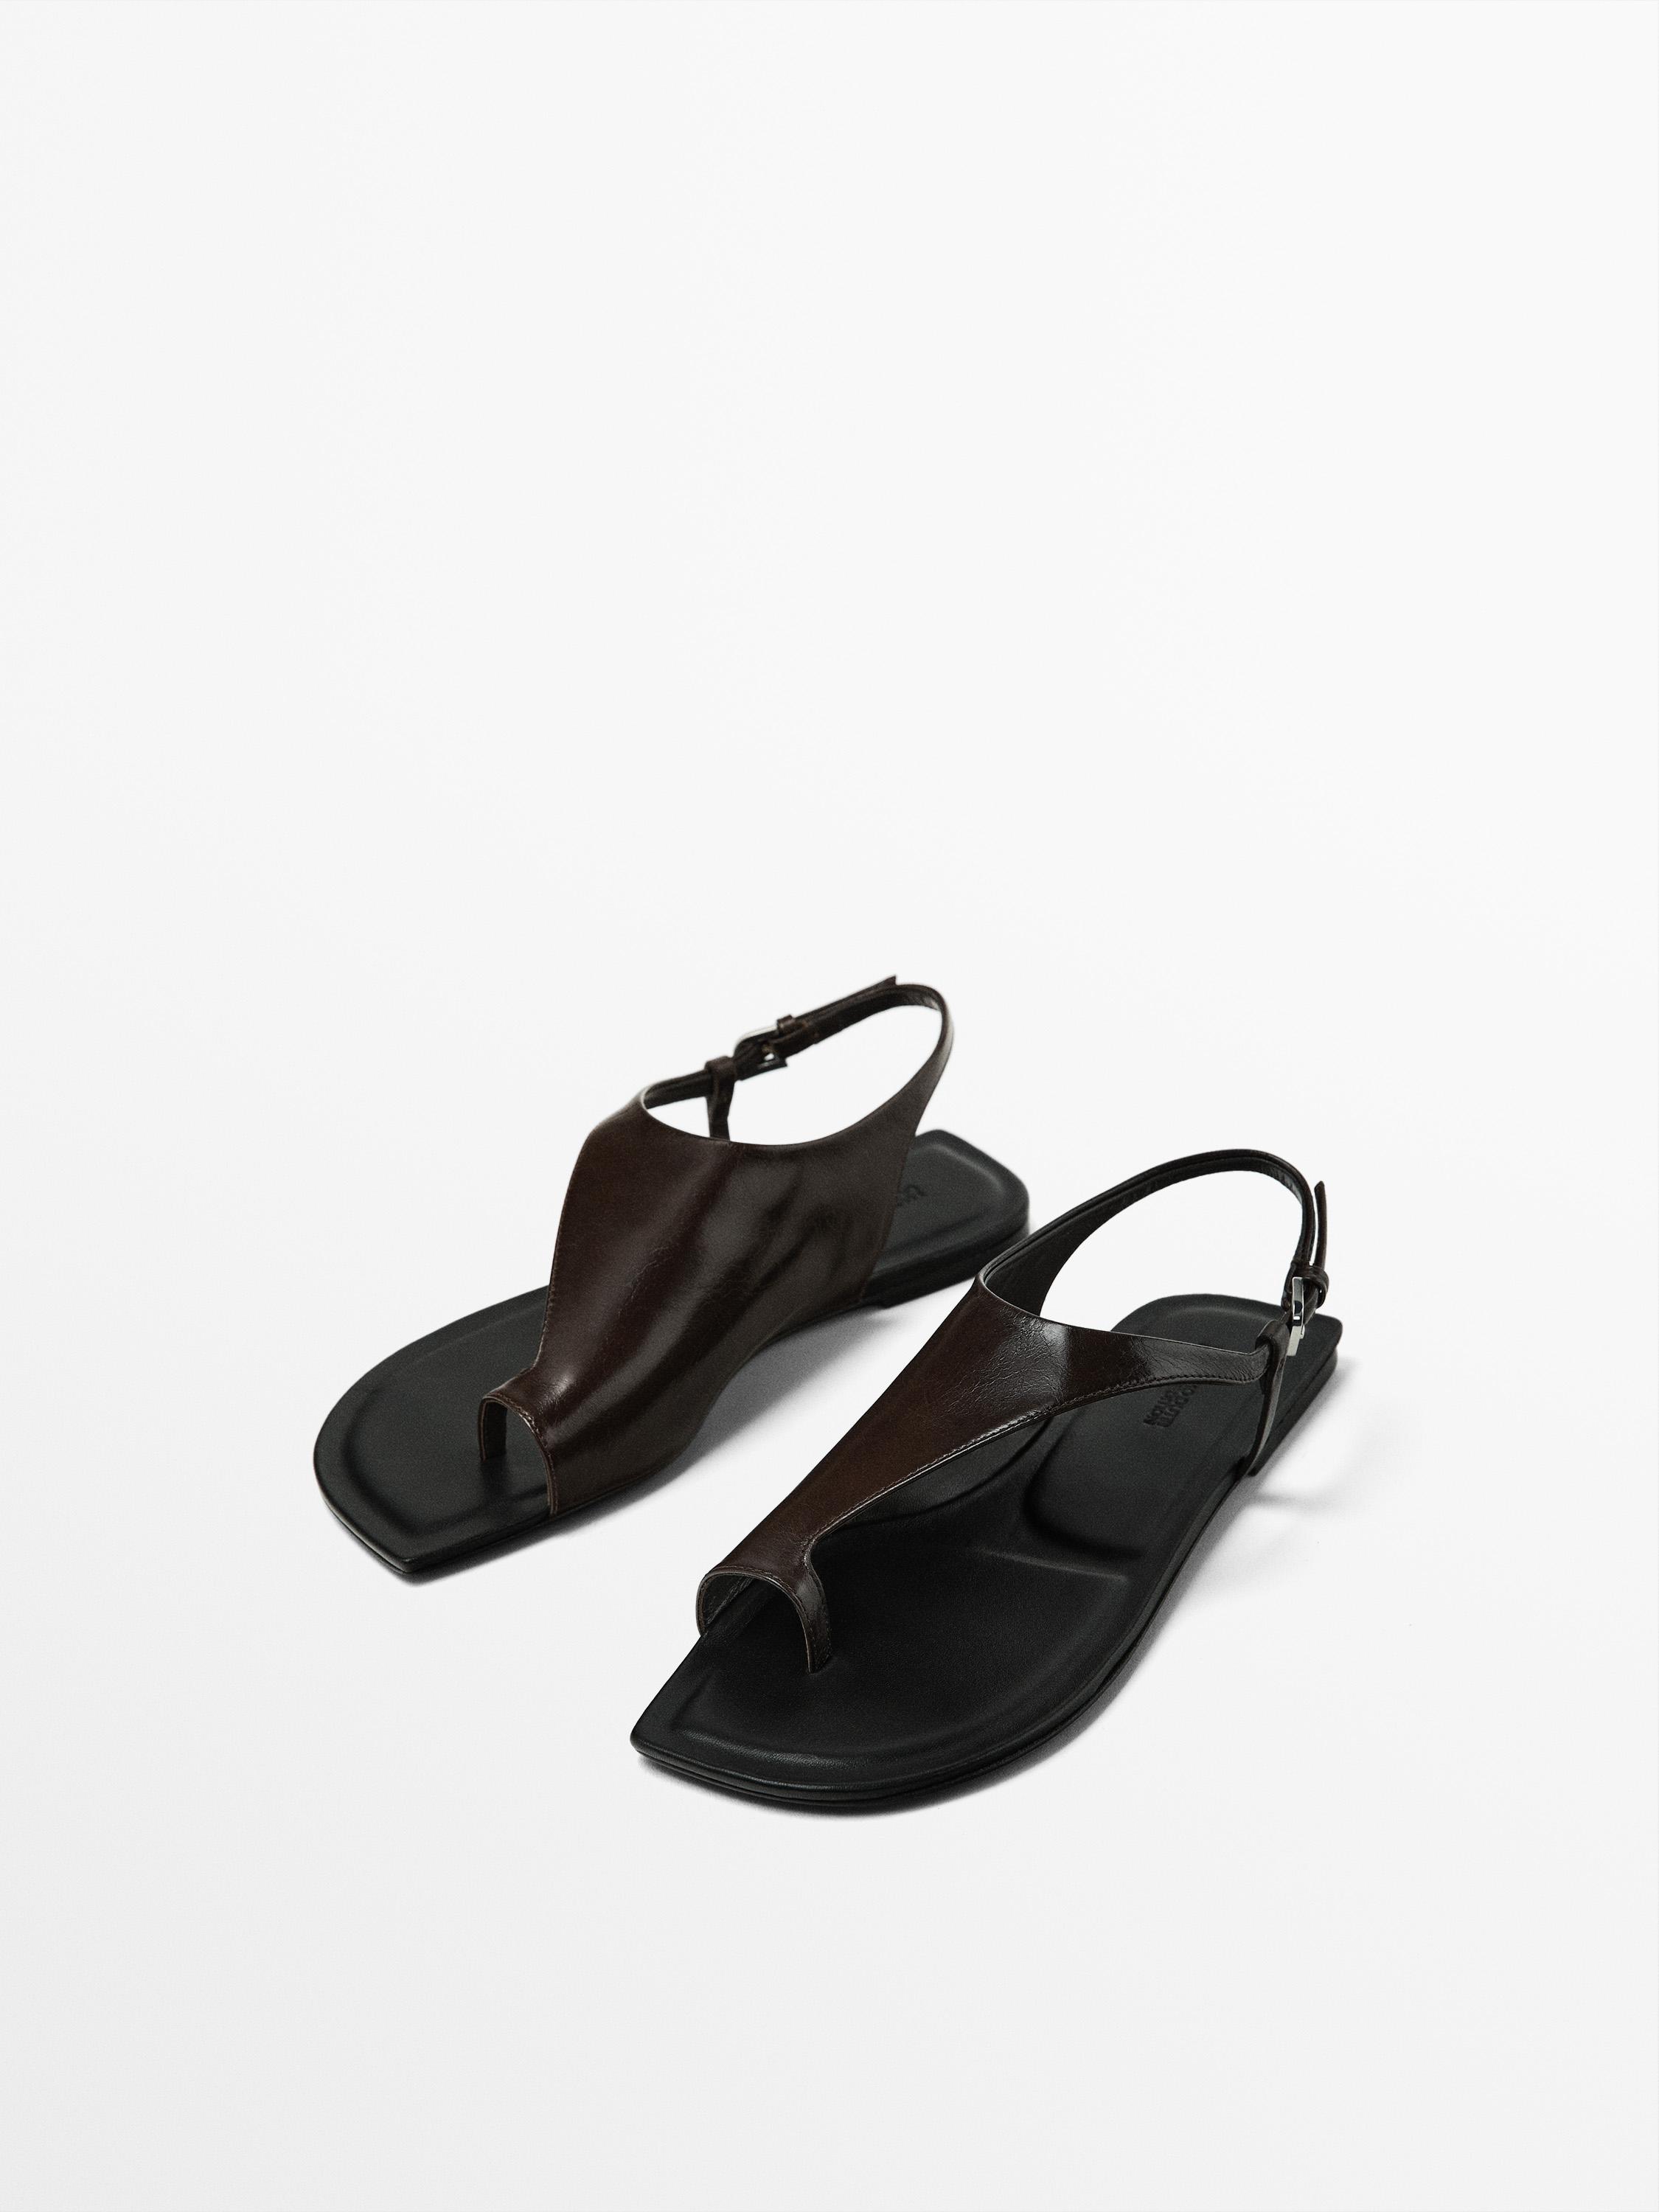 Zara casually makes platform flip flops fashionable - Be Asia